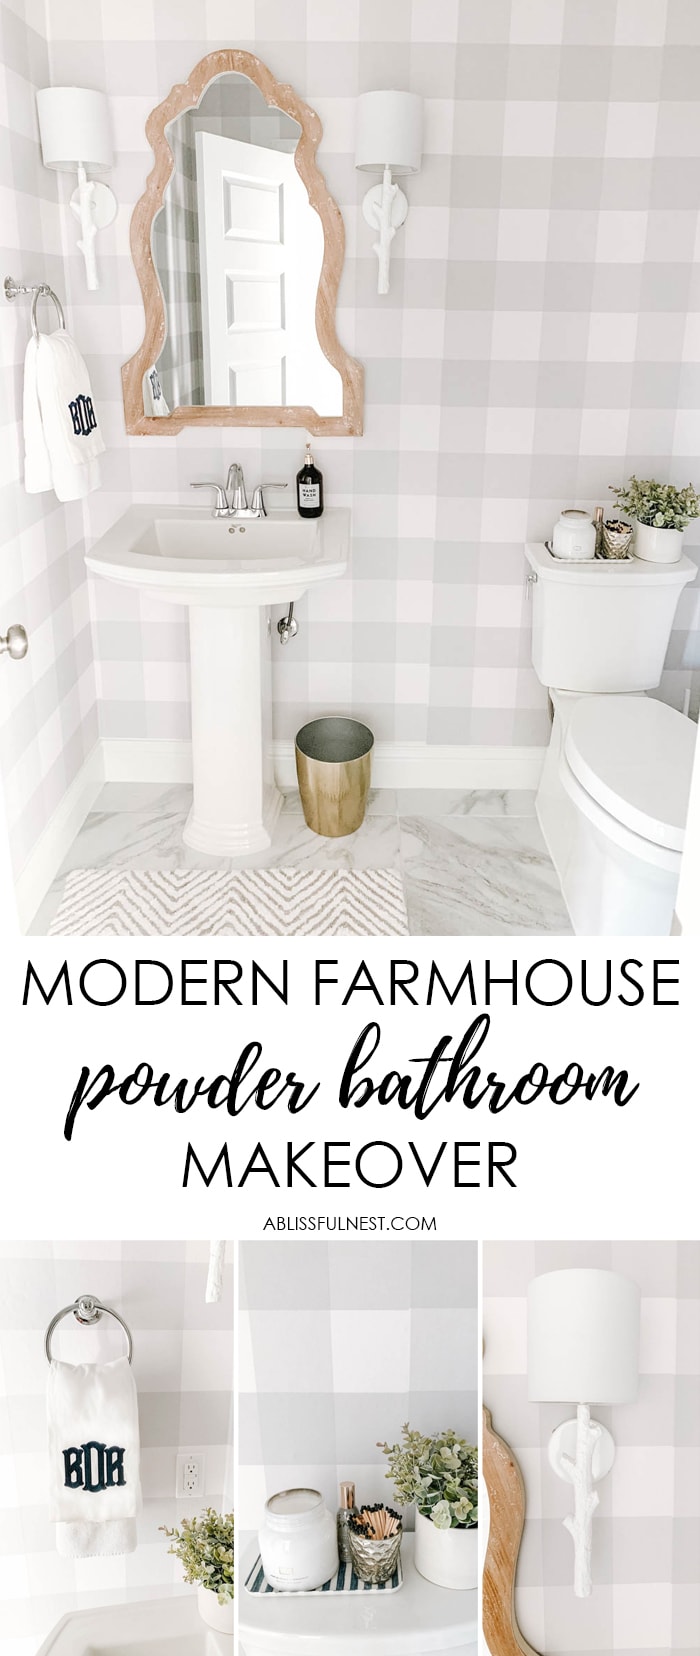 This farmhouse bathroom features grey and white buffalo check wallpaper, gold accents and a white washed wood mirror. #ABlissfulNest #bathroom #bathroomdesign #farmhouse #powderbathroom